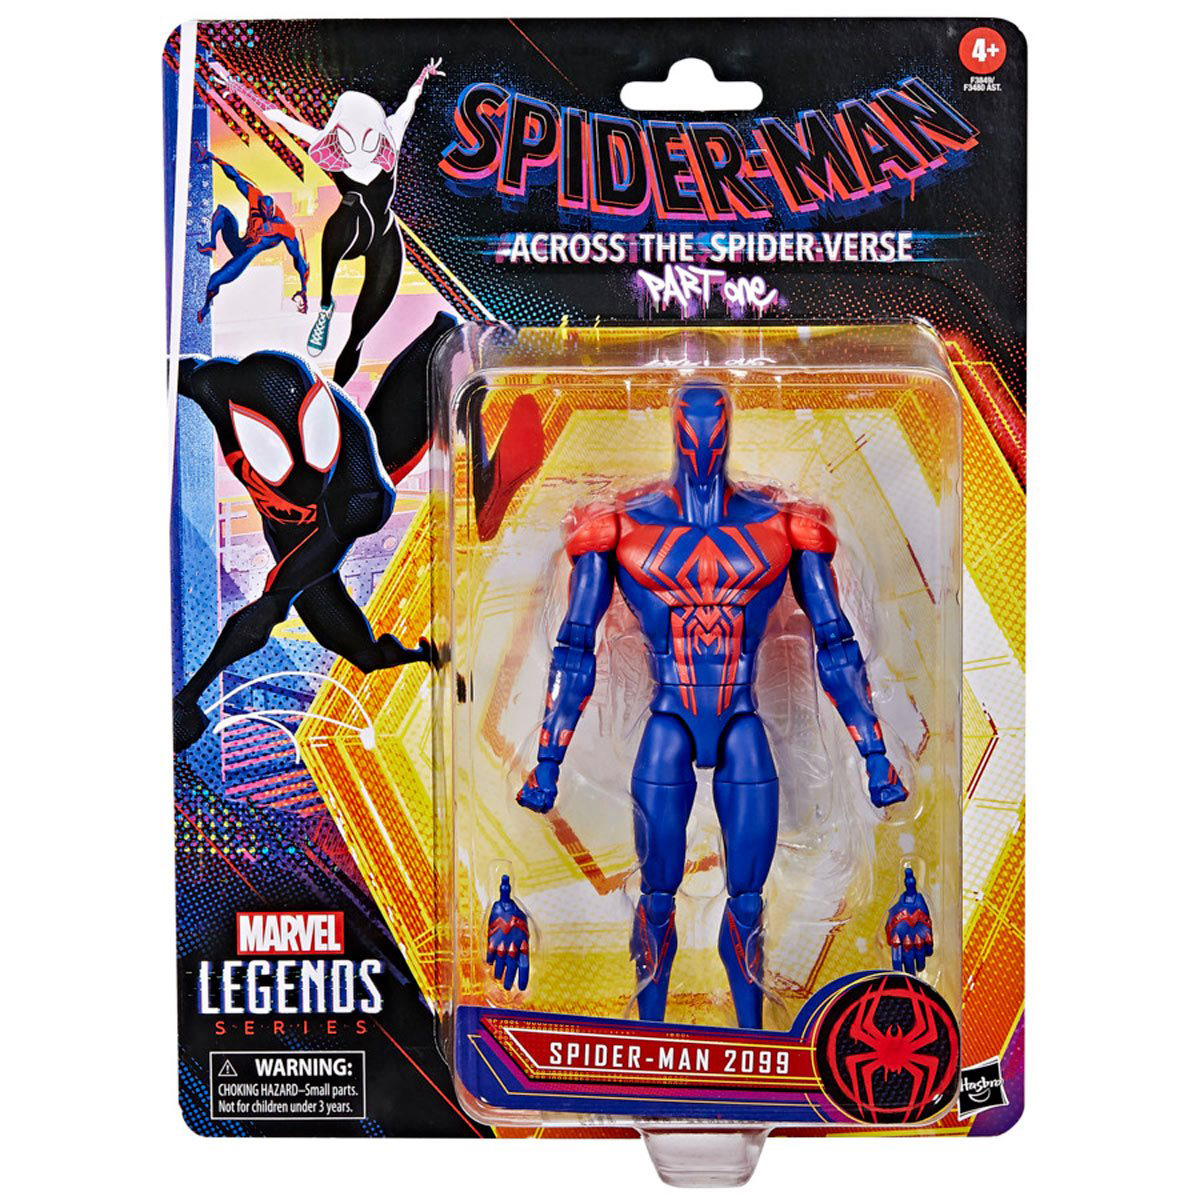 Spider-Man-2099-Marvel-Legends-Spider-Man-Across-the-Spider-Verse-Action-Figure-1